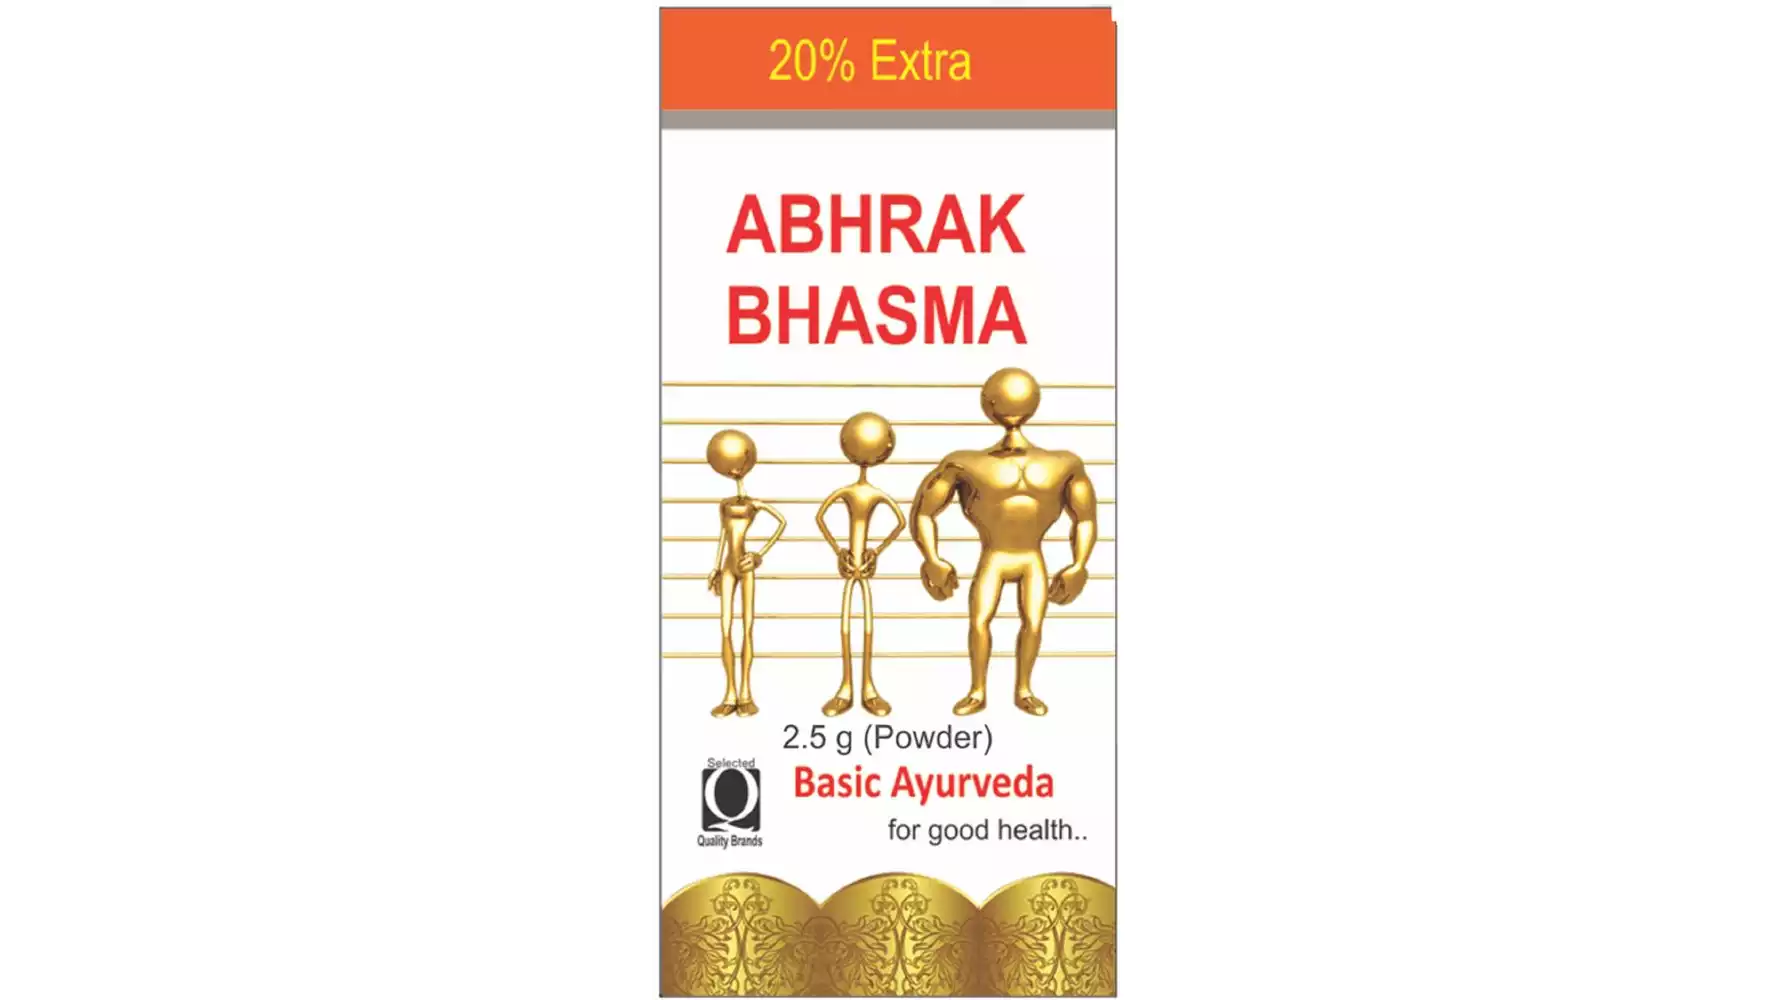 Basic Ayurveda Abhrak Bhasm (2.5g)